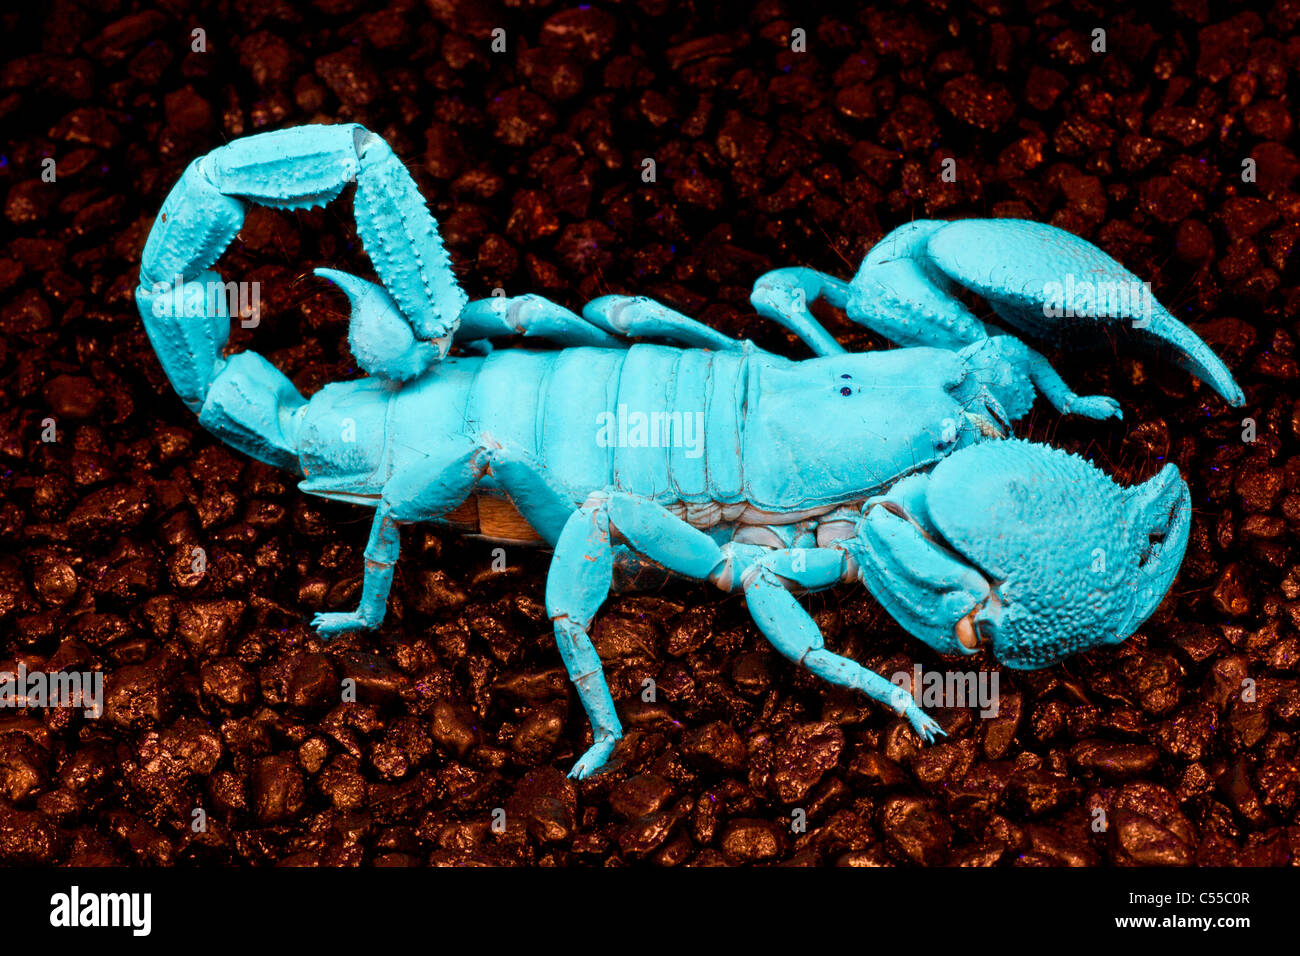 Emperor scorpion (Pandinus imperator) under ultraviolet light Stock Photo